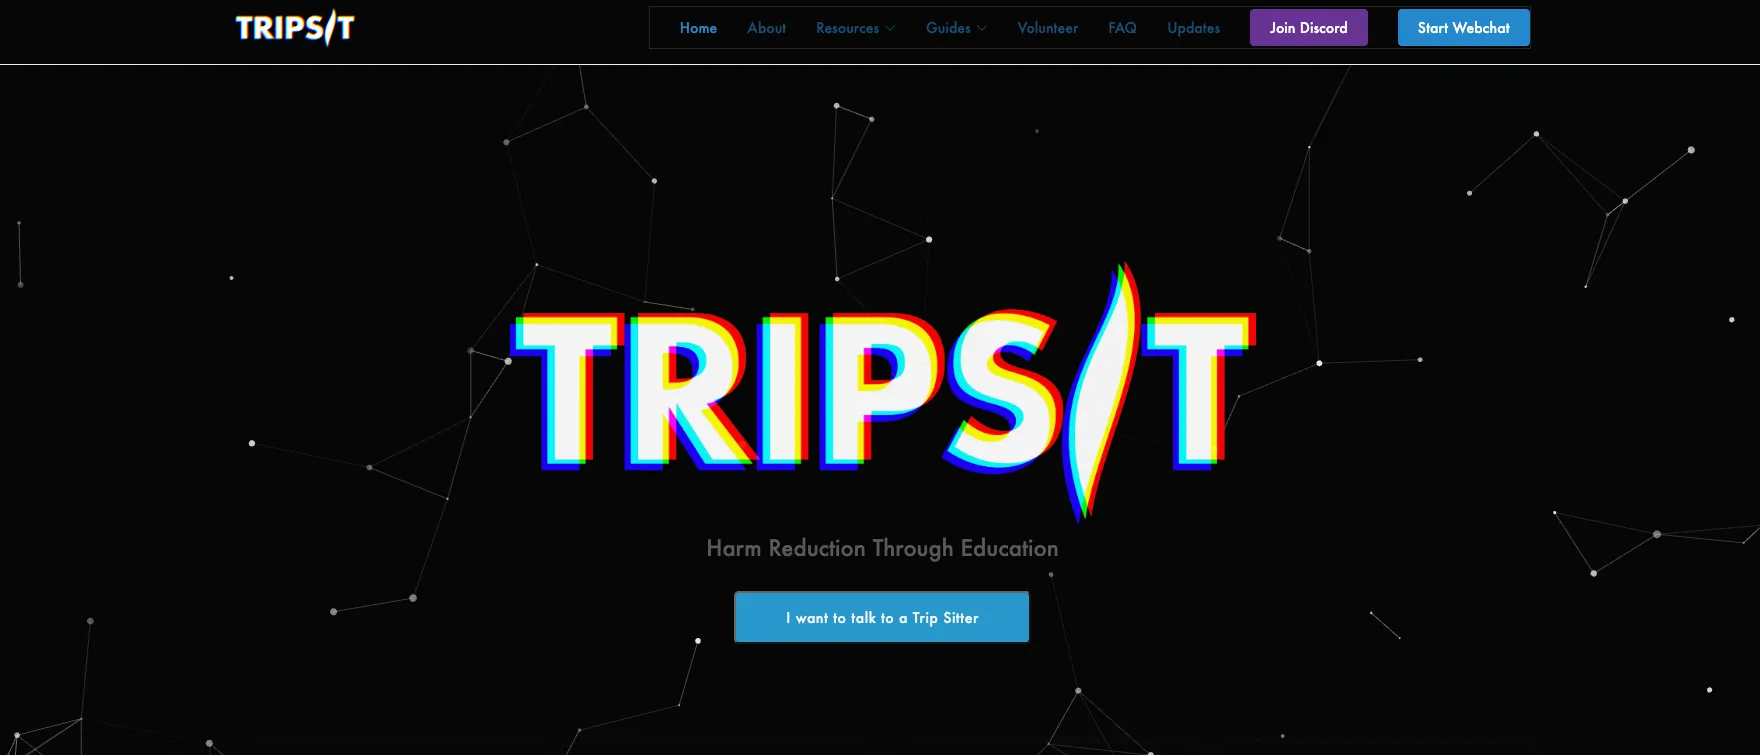 TripSit homepage